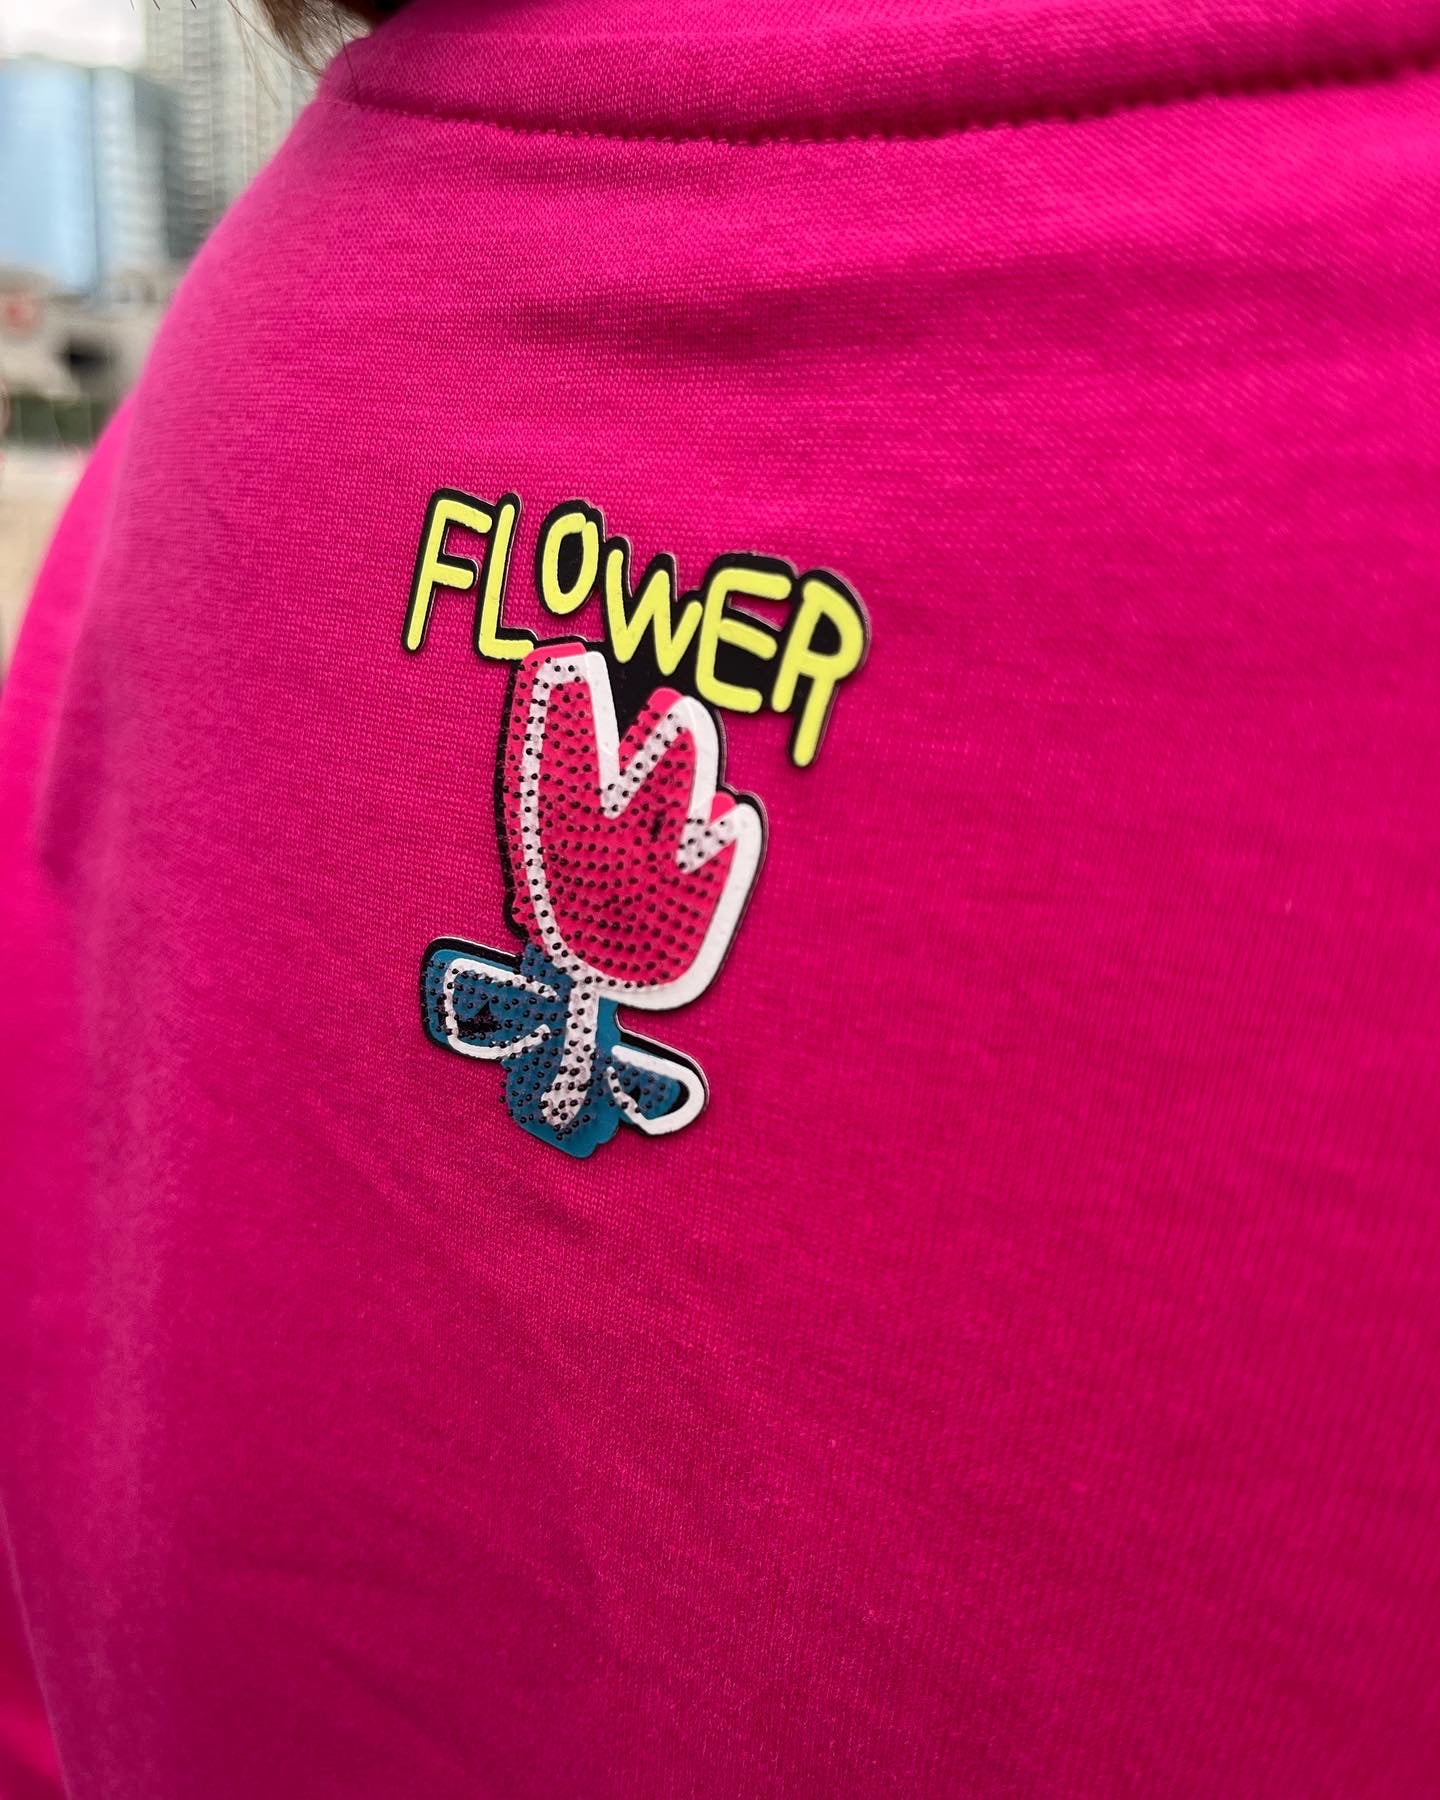 Flower Pink Top